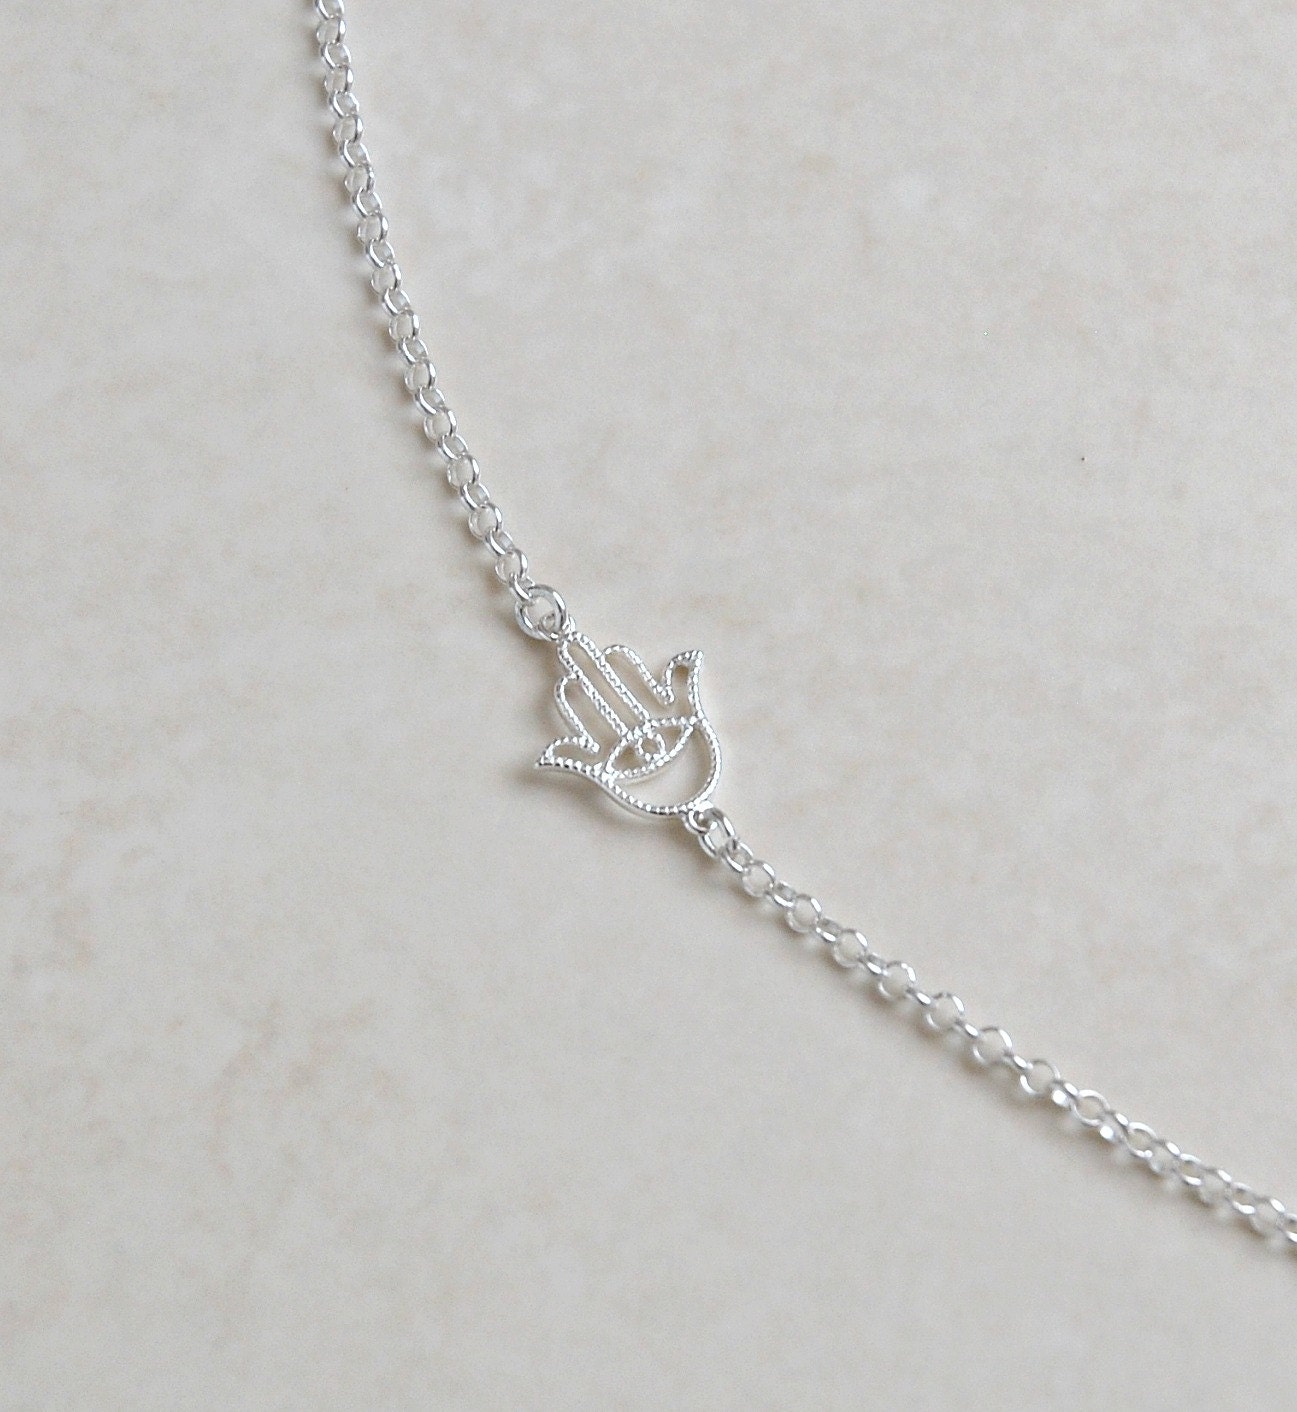 Silver hamsa necklace - sterling silver hamsa hand connector - hamsa charm - hand of fatima - mini hamsa - trendy protection jewelry - Asima - littleglamour